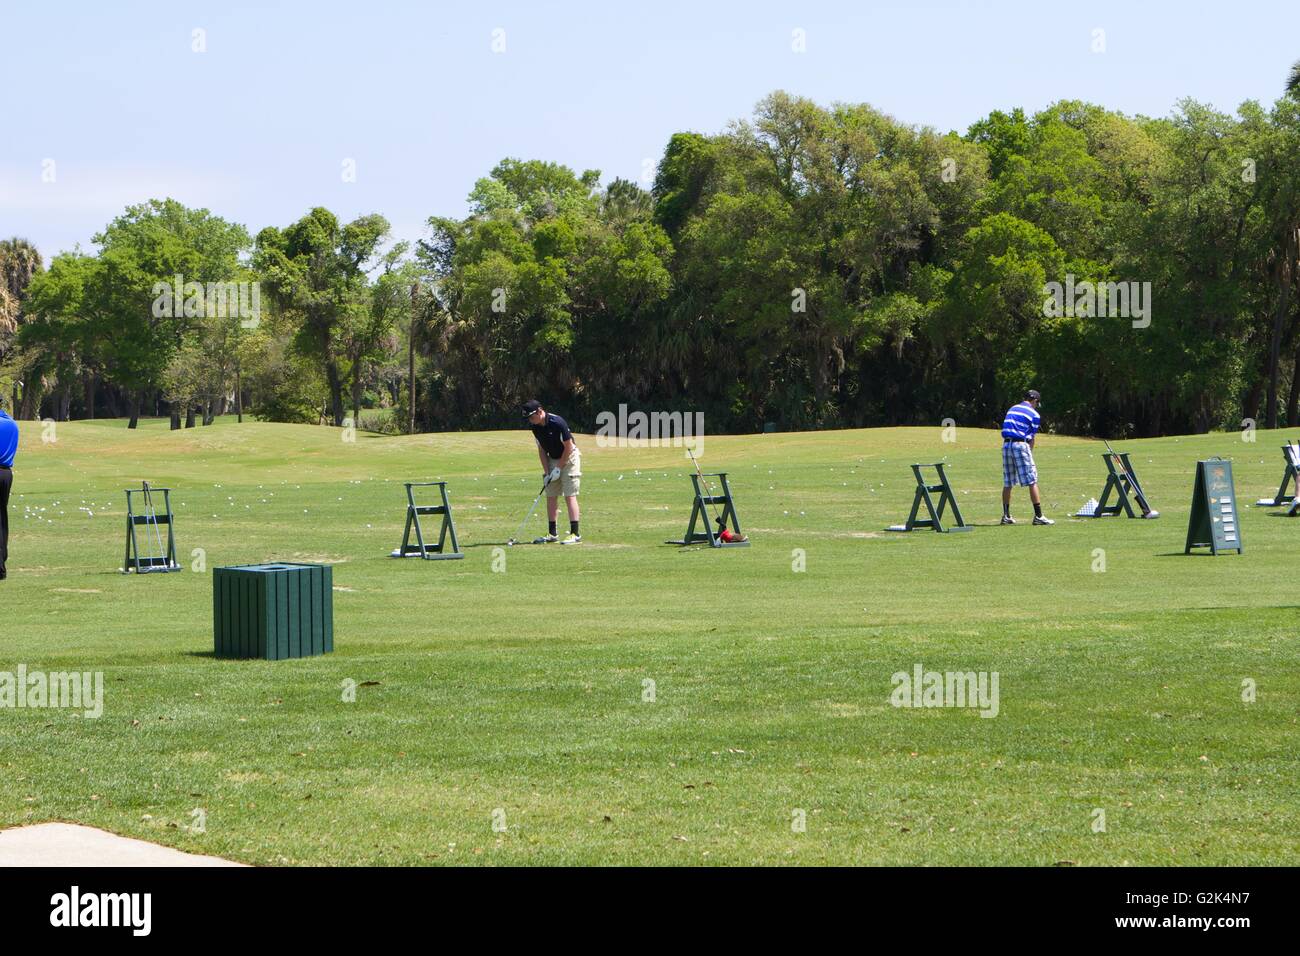 Golfers on a driving range Stock Photo